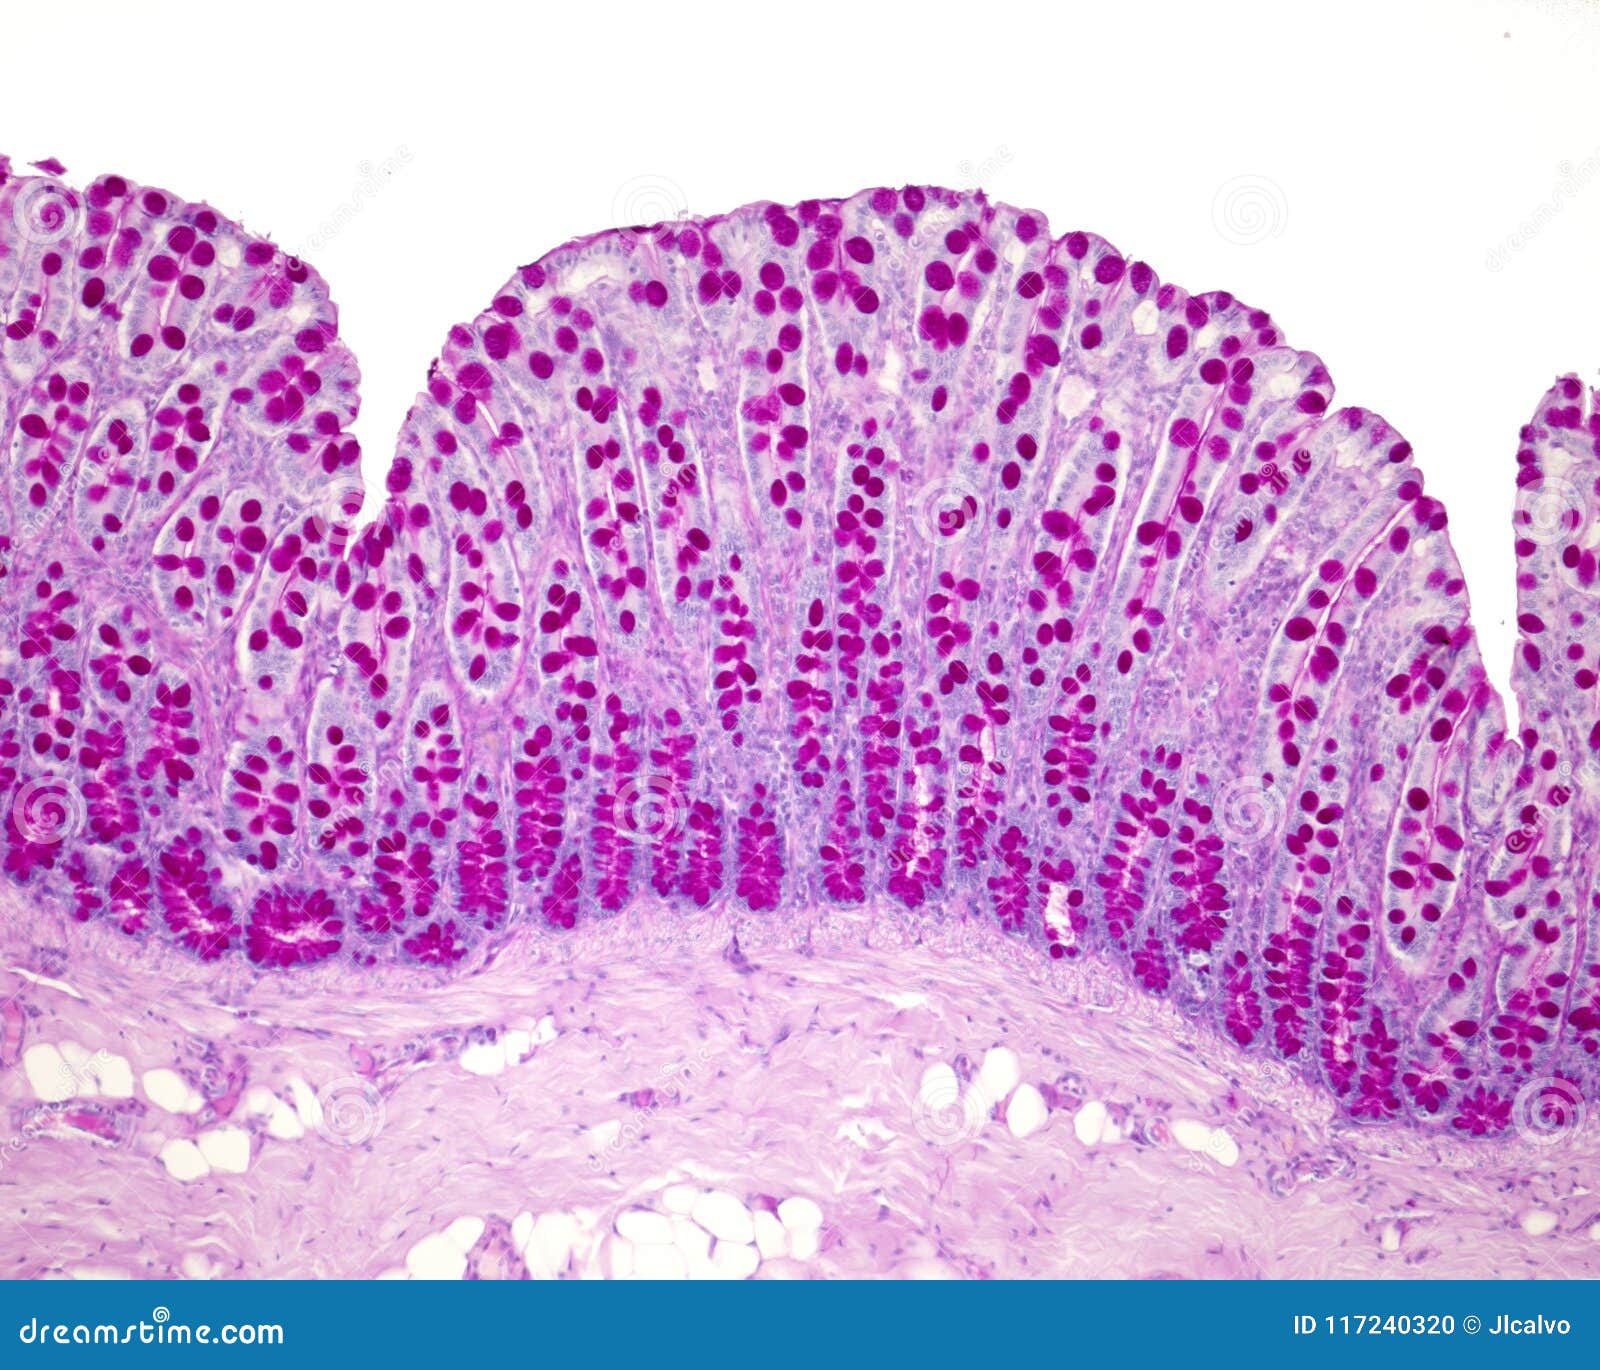 colon mucosa. goblet cells